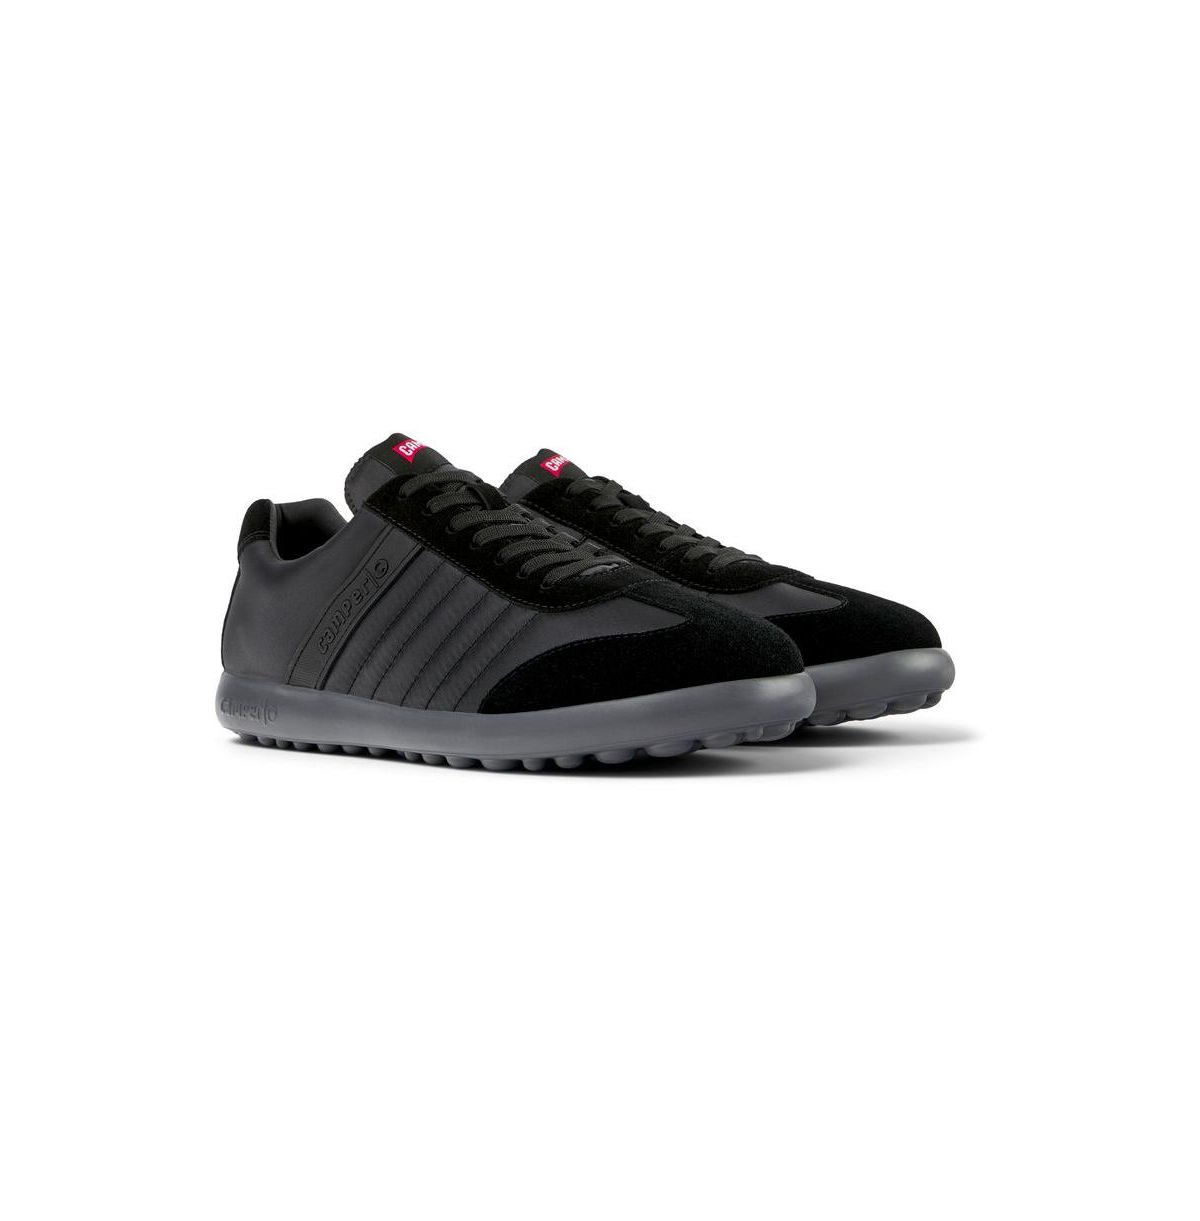 Men's Pelotas Xlf Sneakers - Black